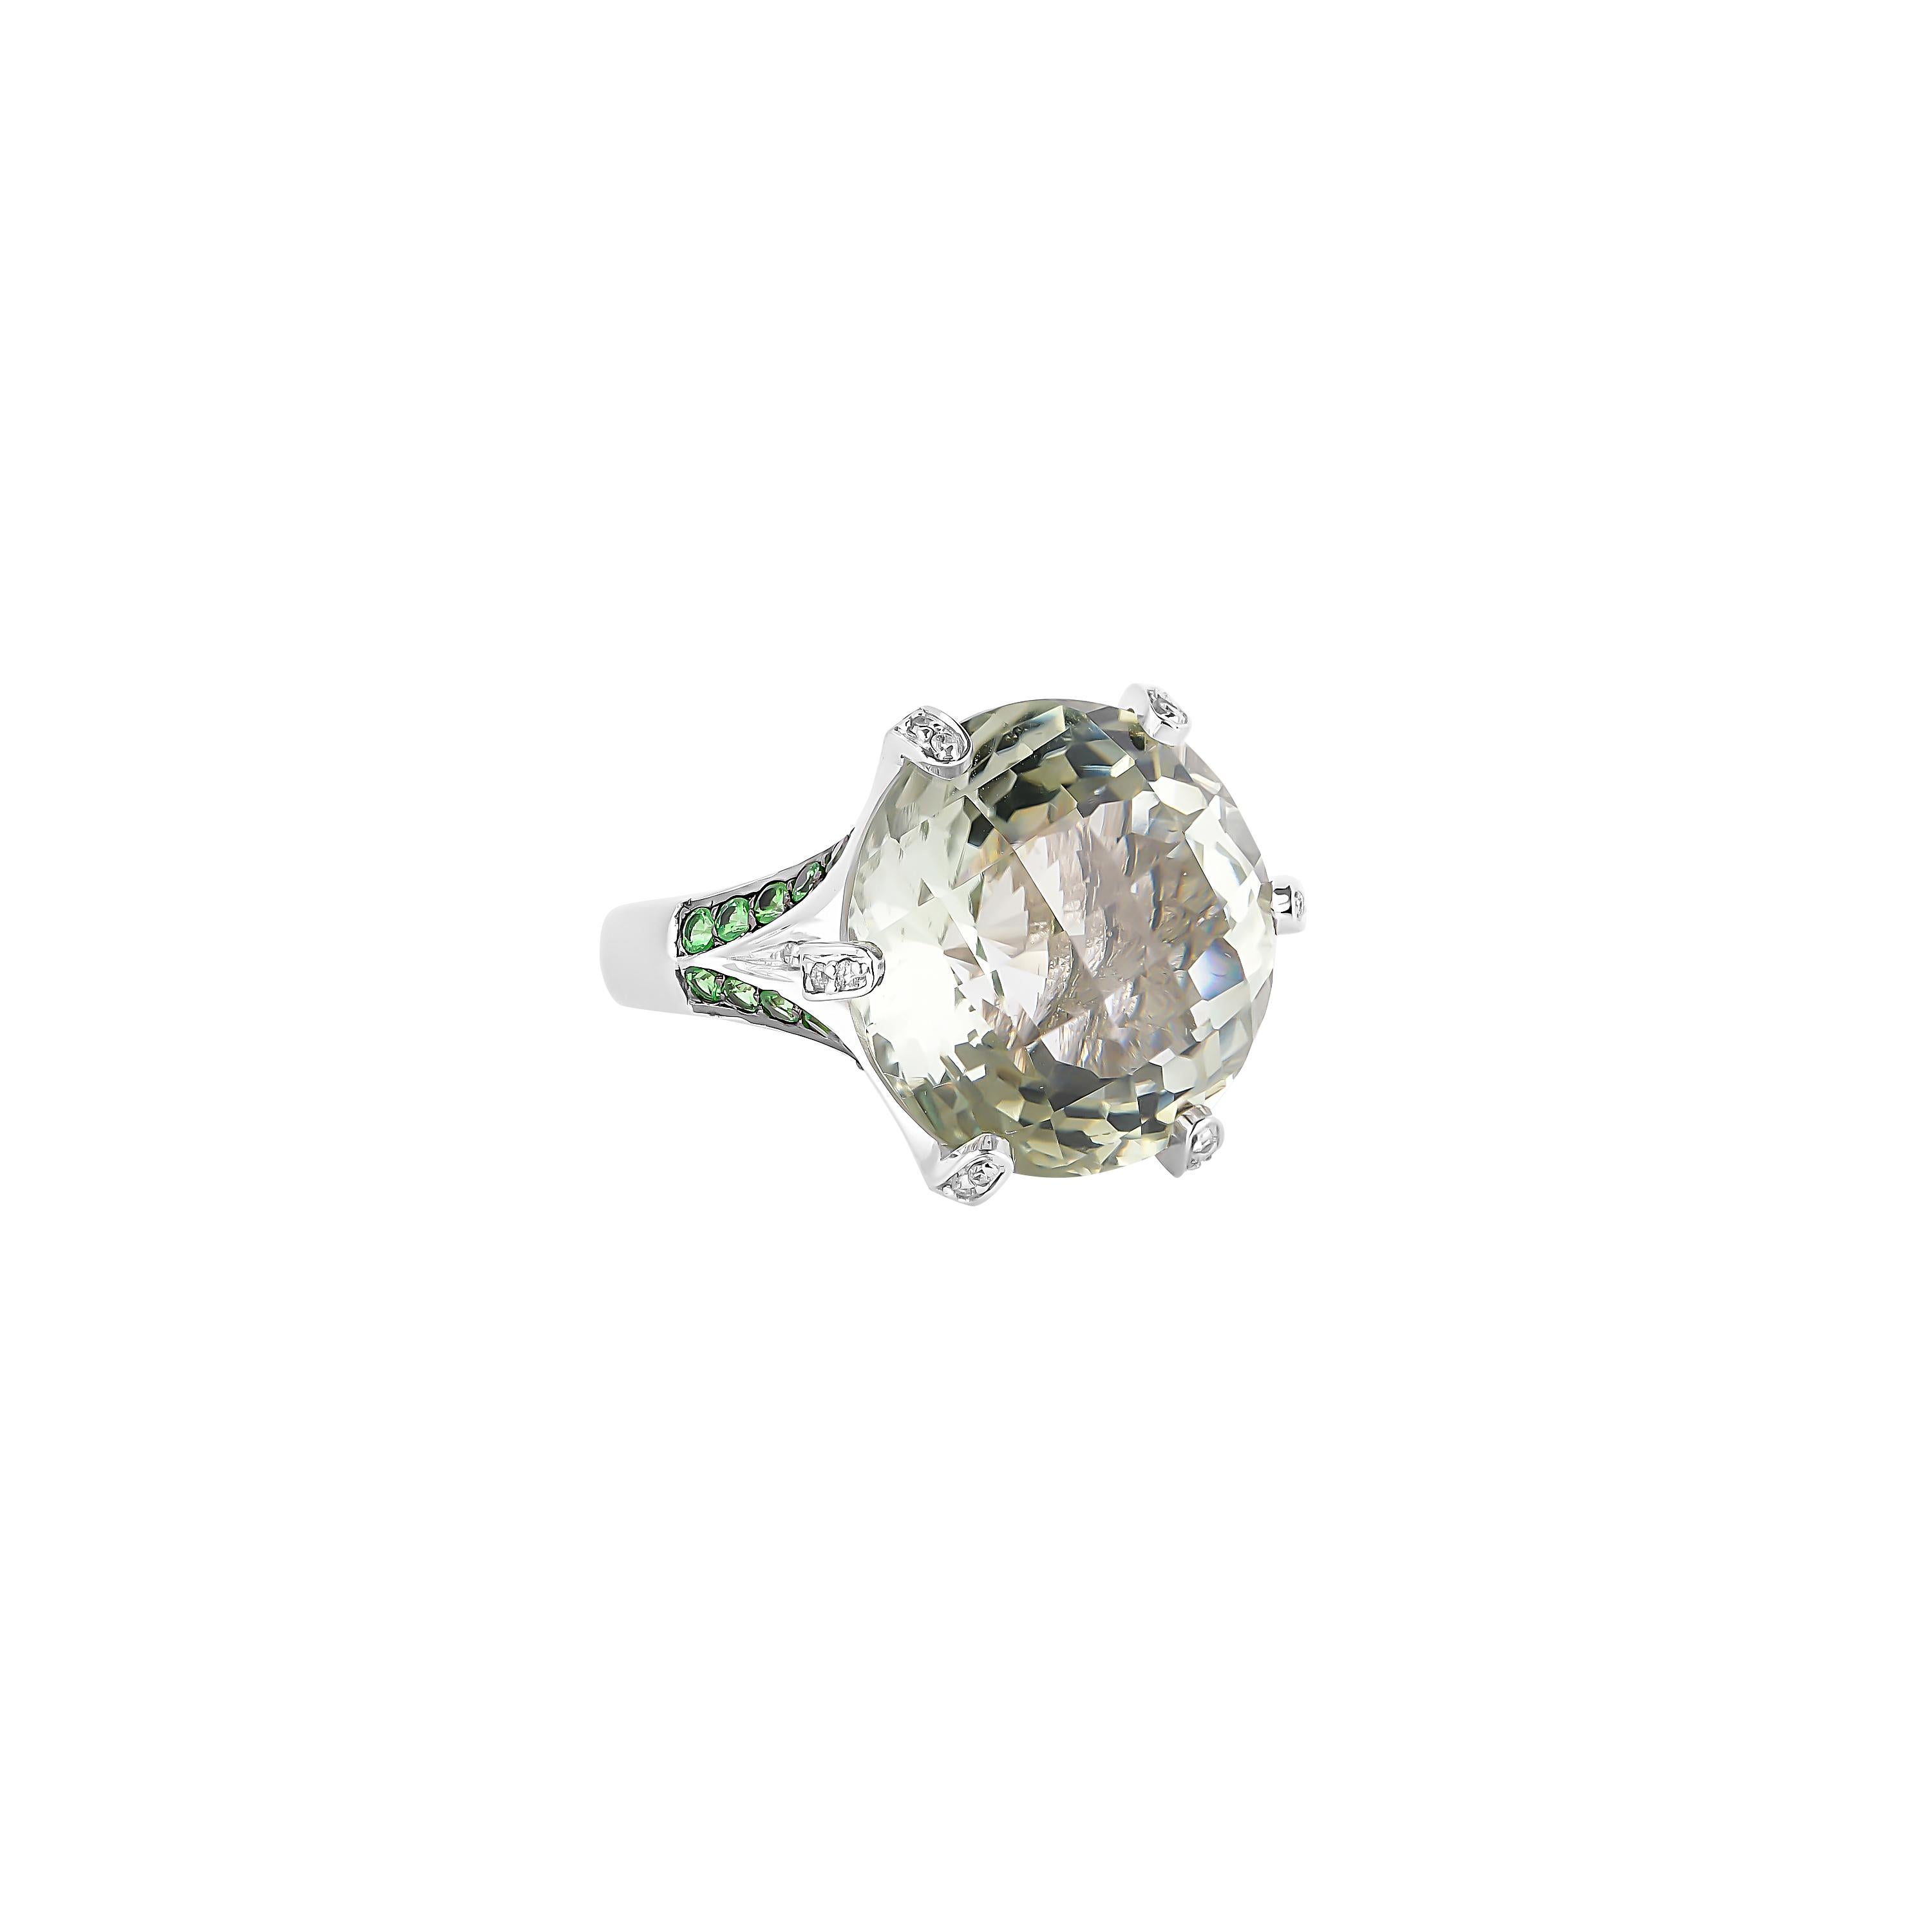 Contemporary 20 Carat Green Amethyst, Tsavorite and Diamond Ring in 14 Karat White Gold